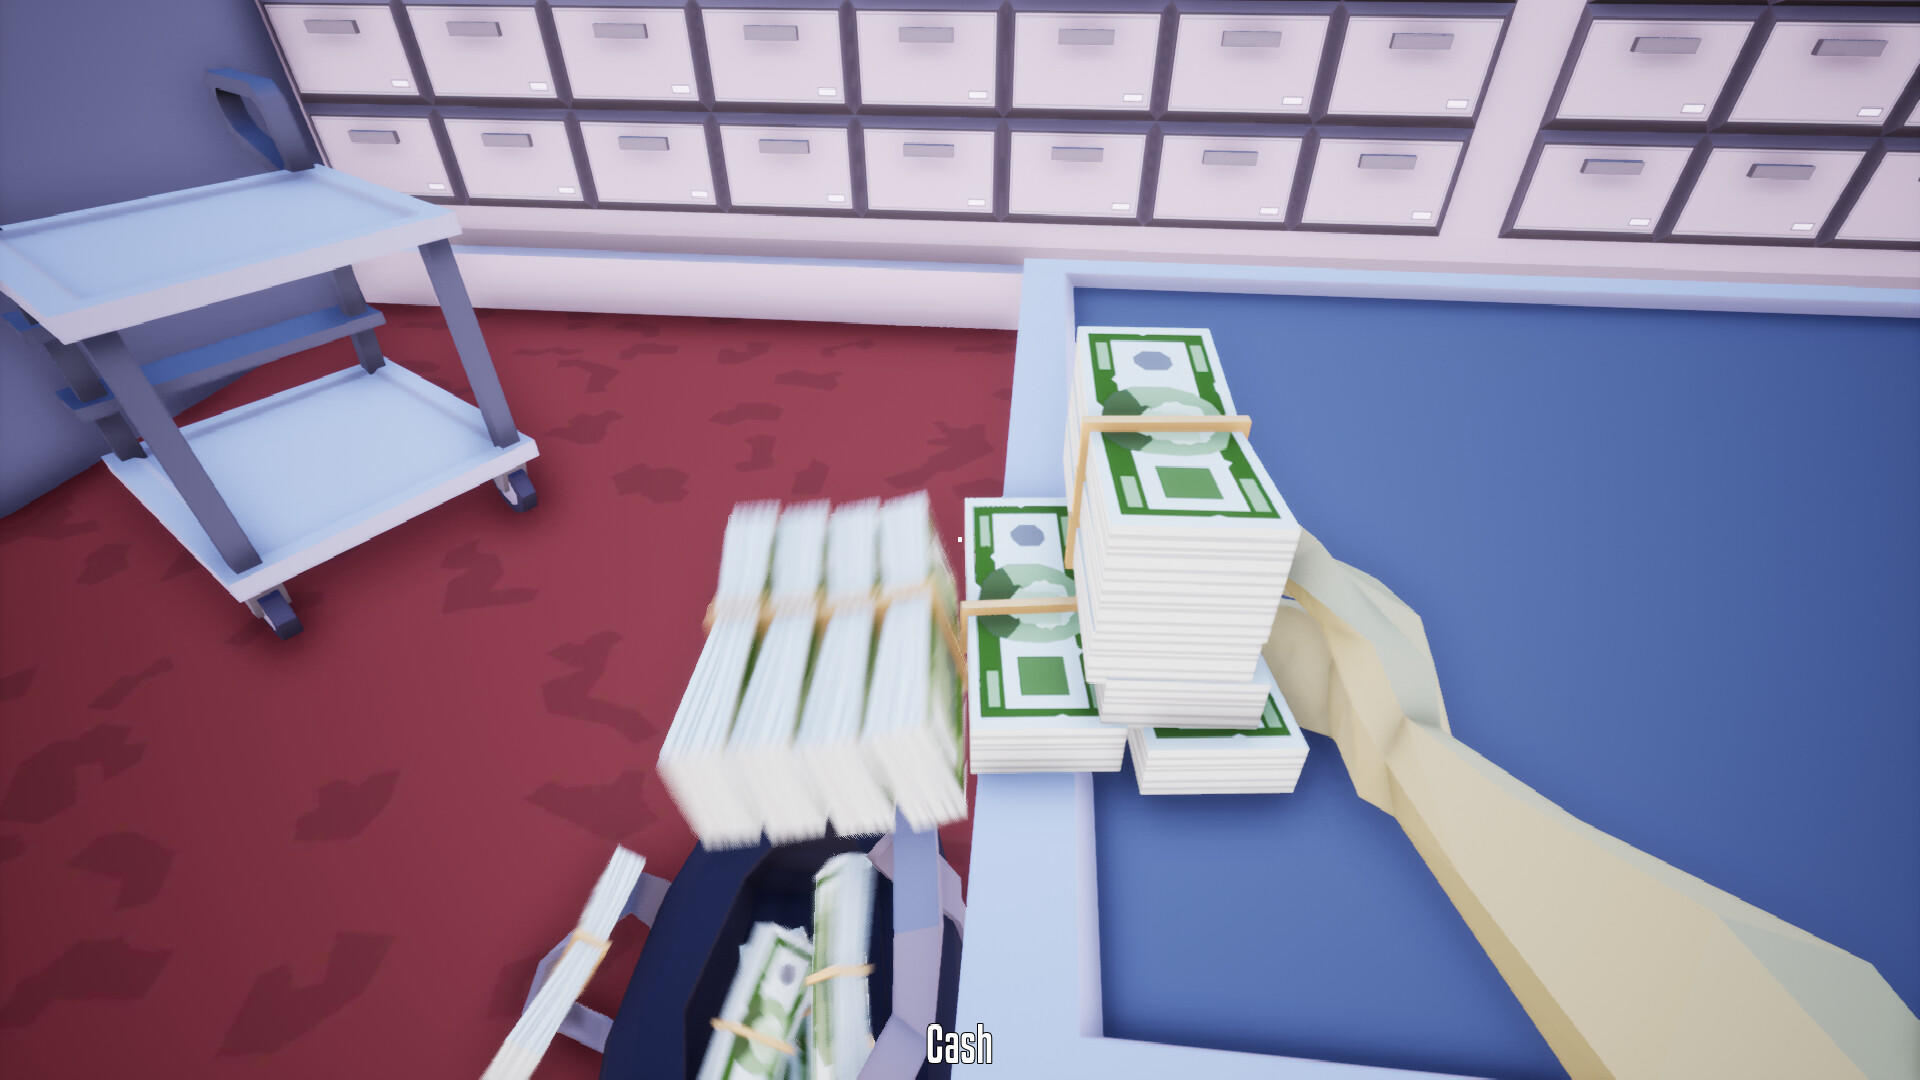 One-armed robber screenshot game